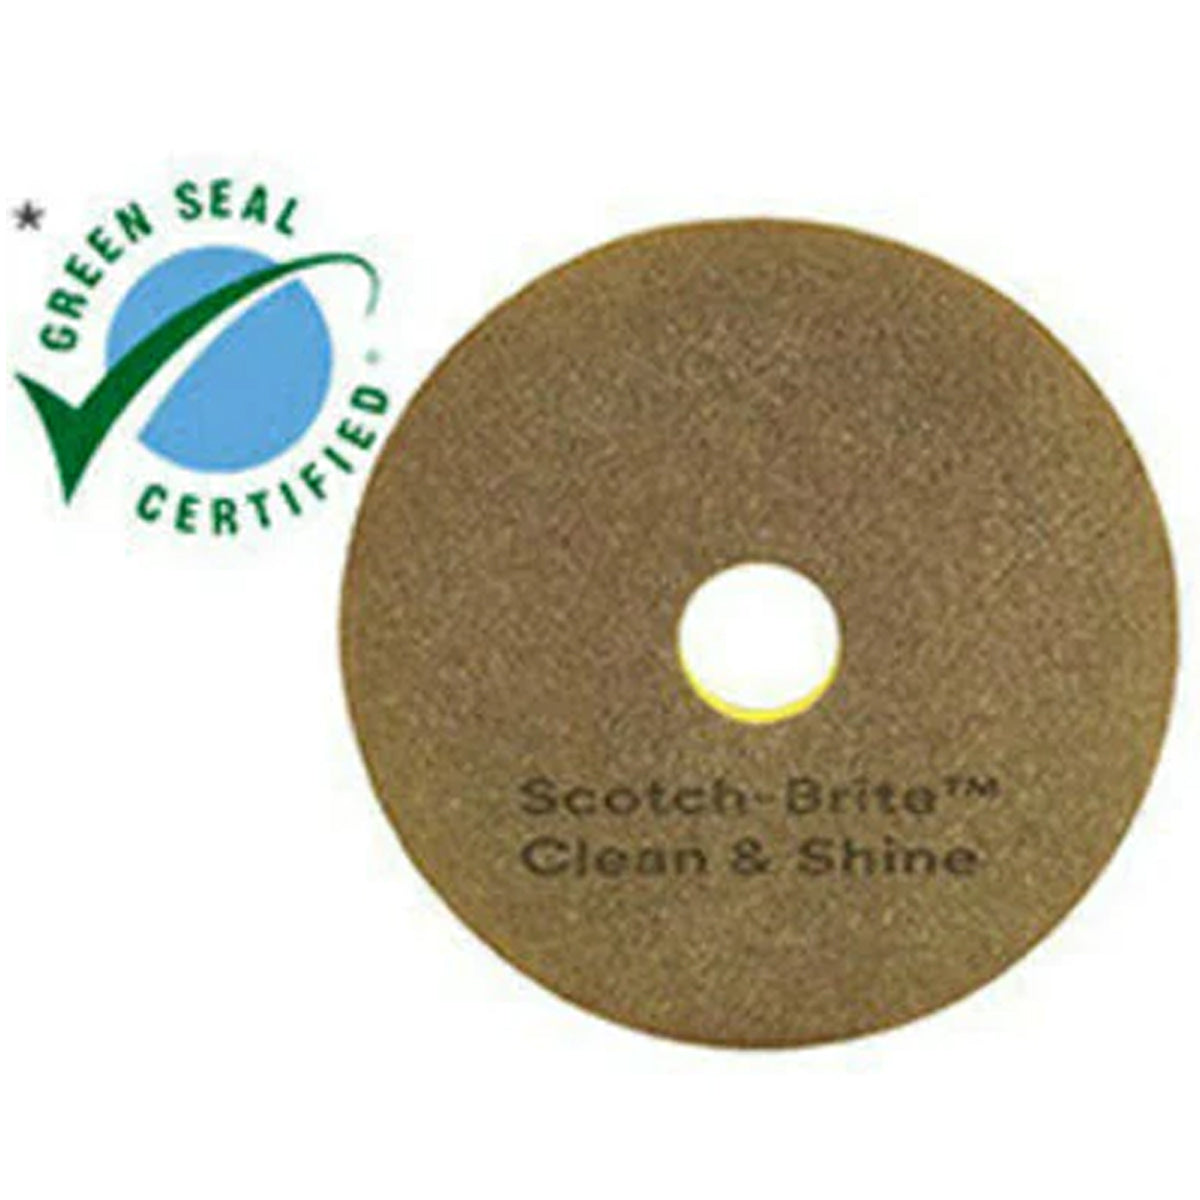 Disco para Piso Scotch-Brite Clean & Shine, 16 pulgadas, 5/Caja